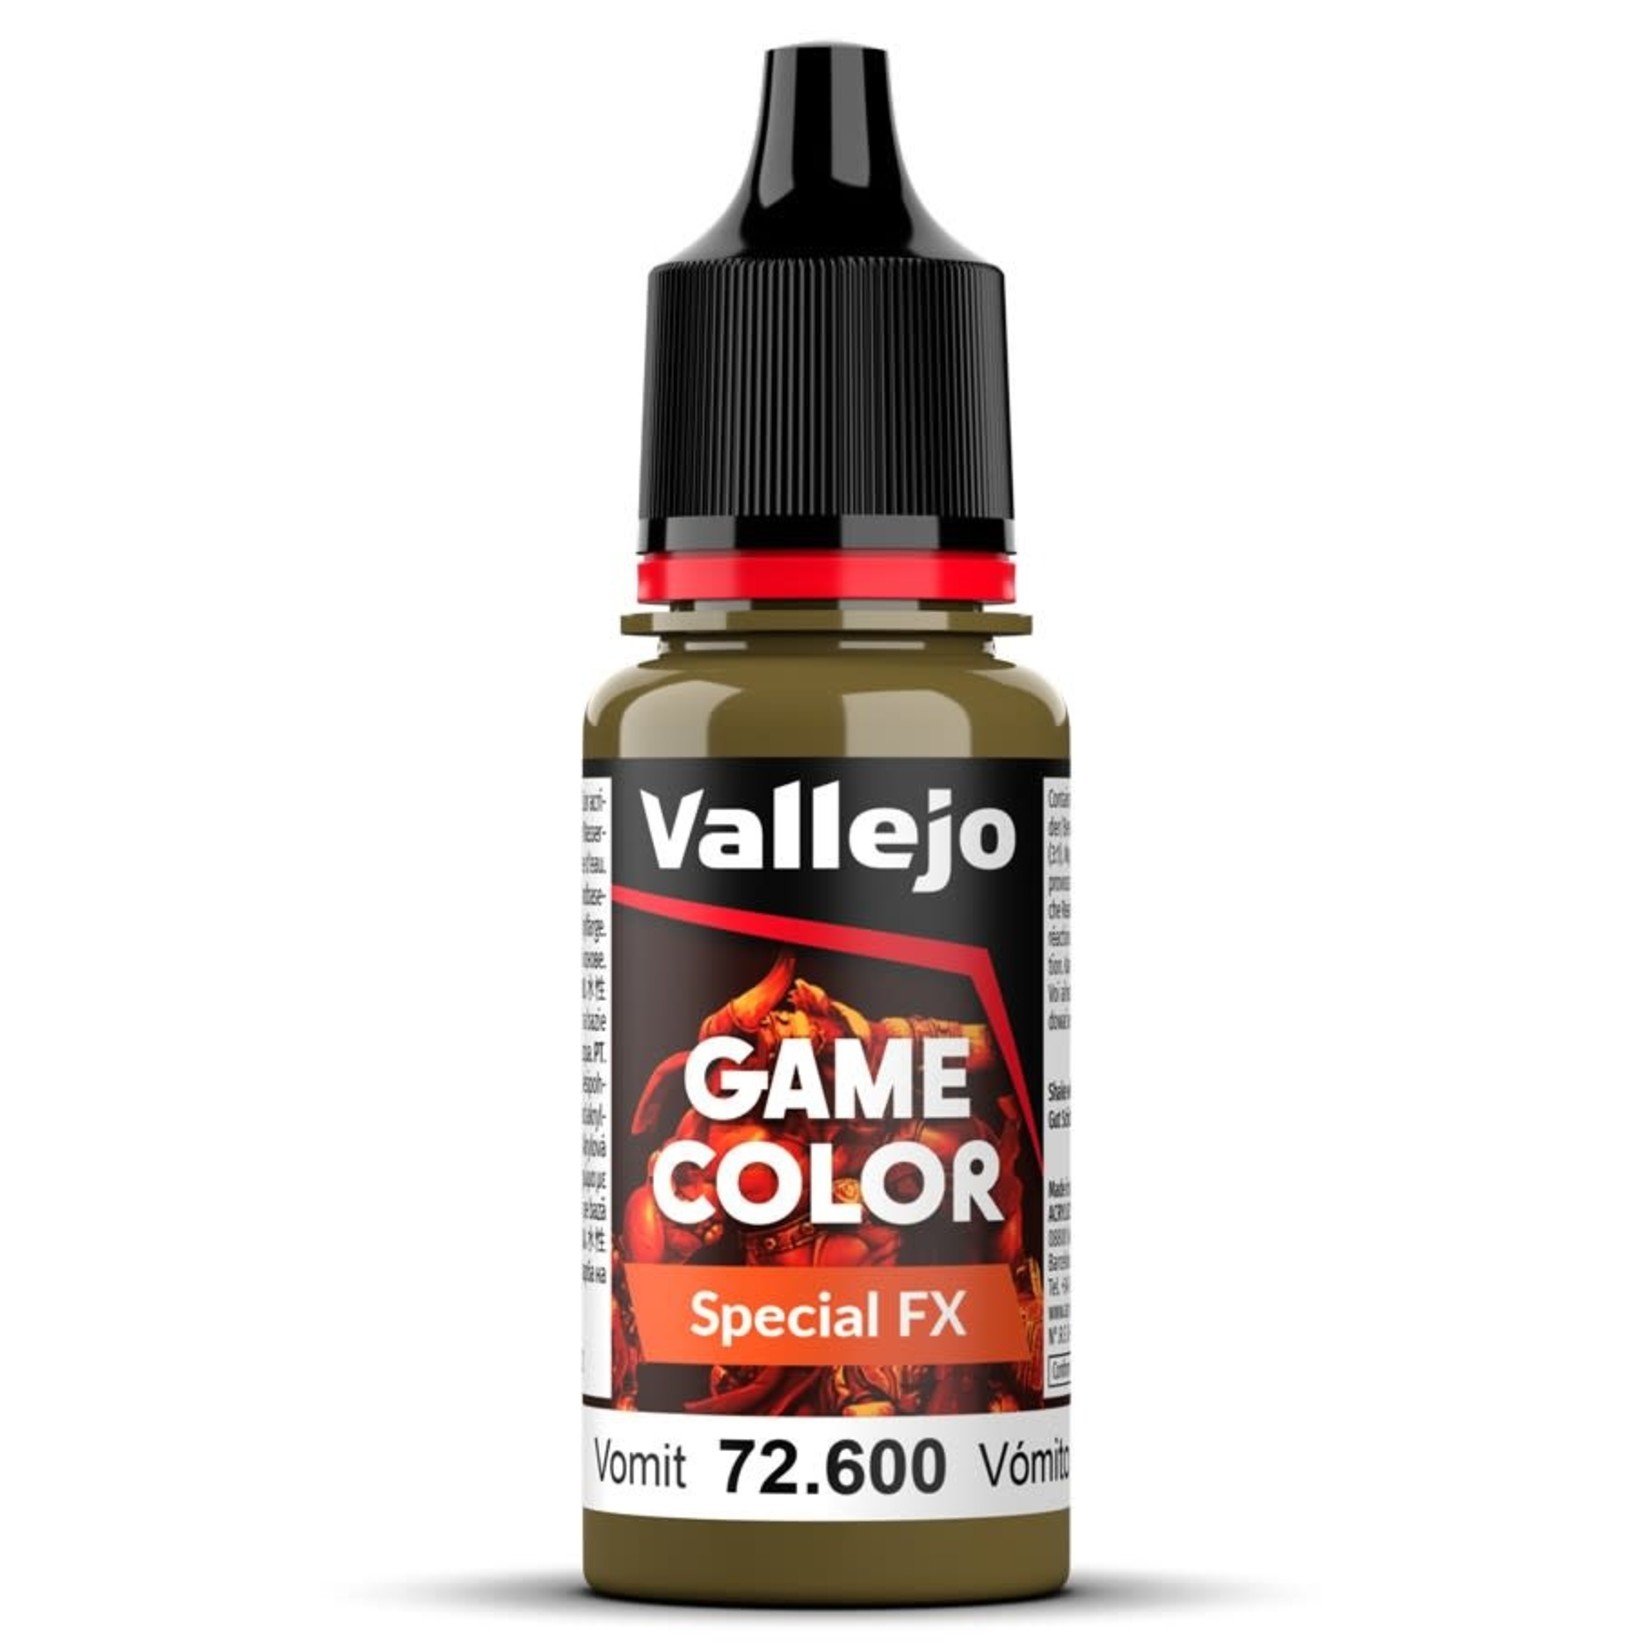 Vallejo Paint: Game Color, Special FX (Vomit)